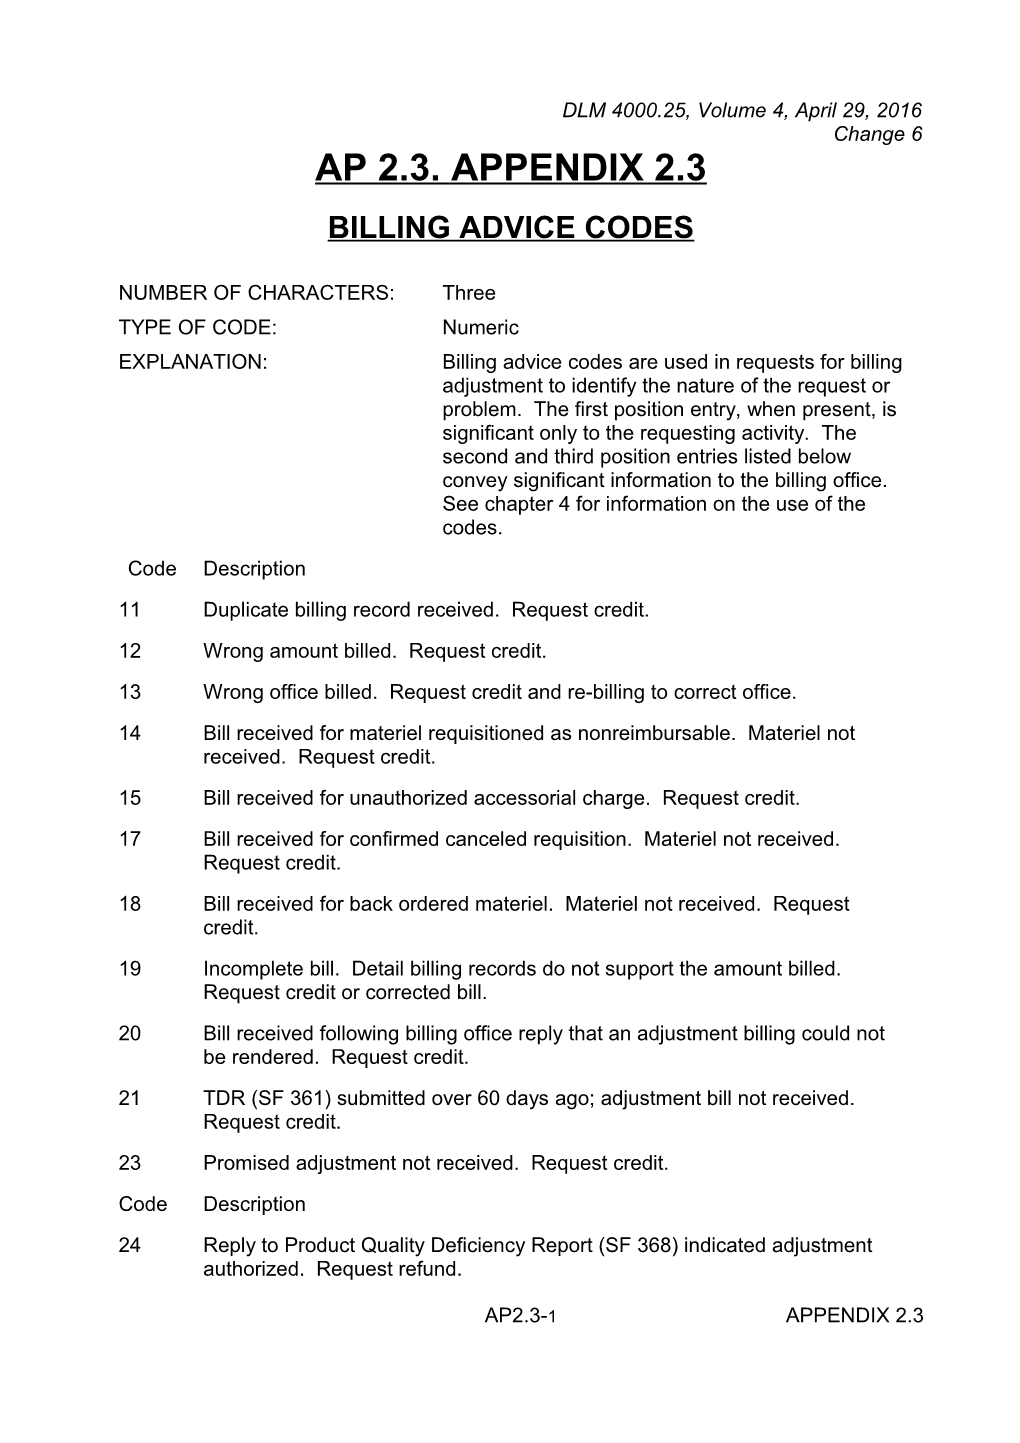 AP2.3 Billing Advice Codes